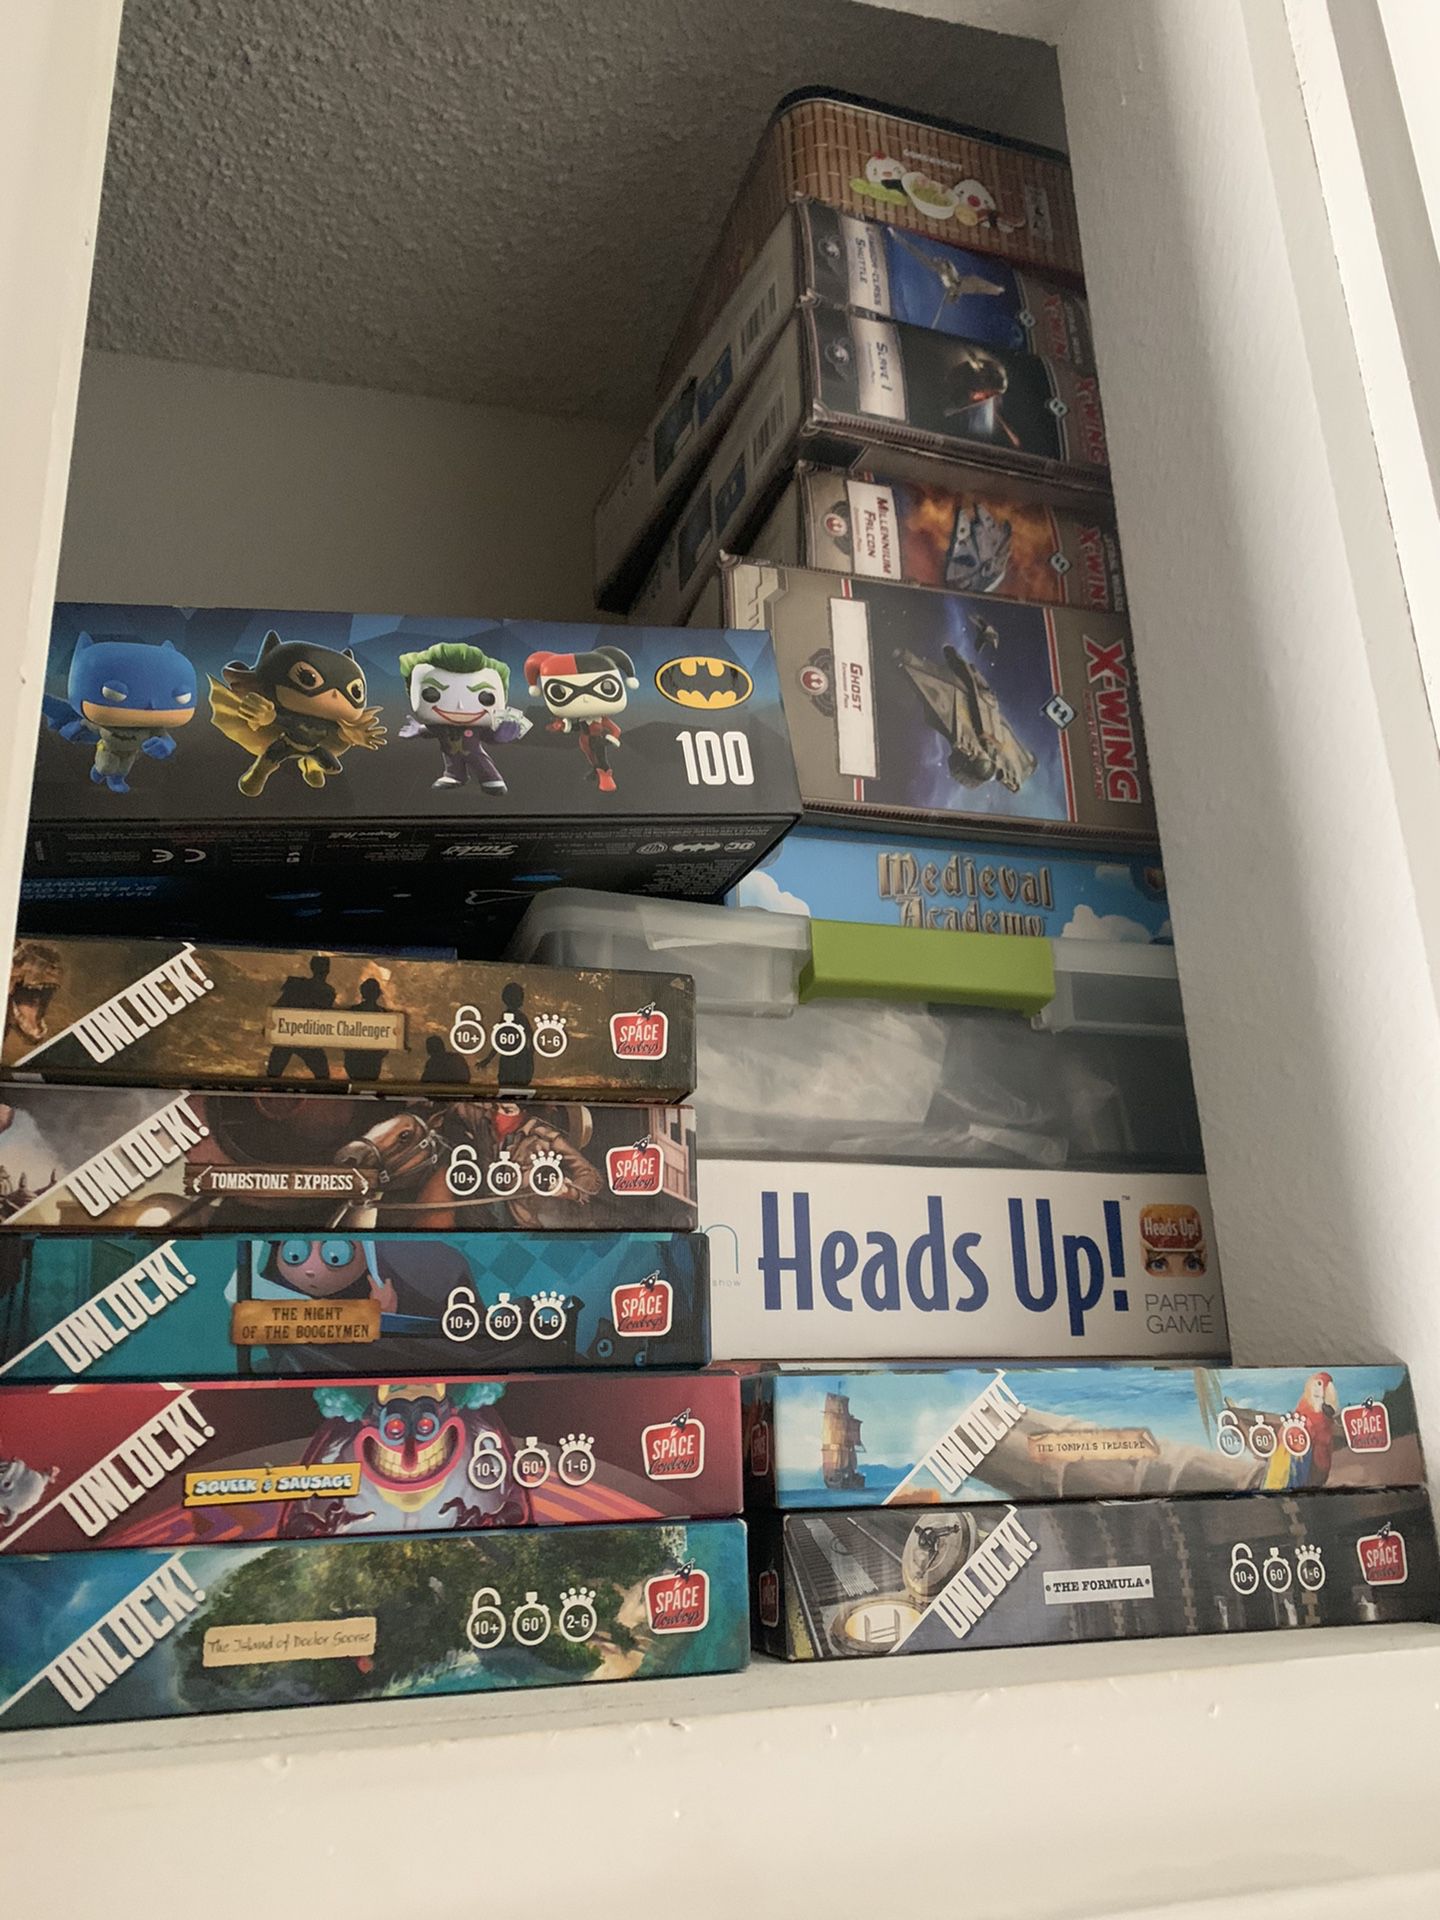 Board Game Bundle